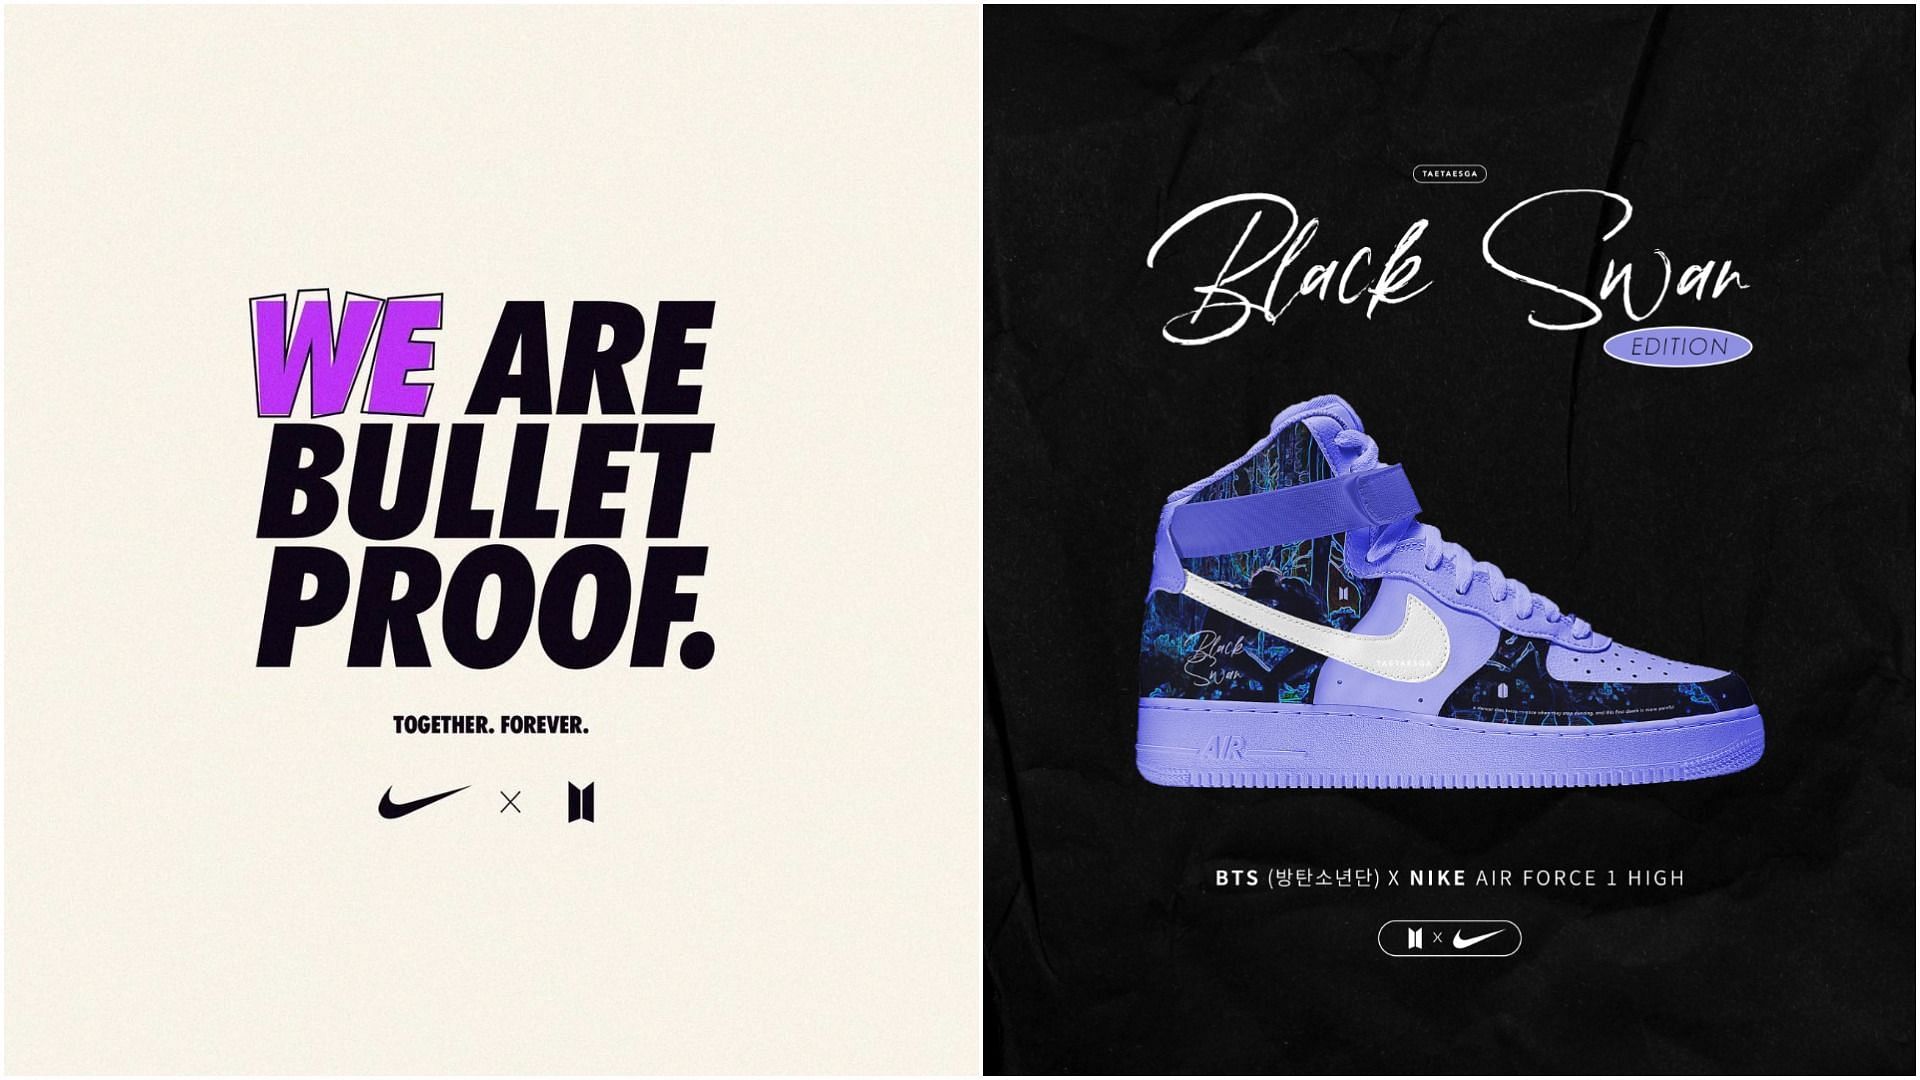 BTS x Nike Black Swan design over Twitter, sparks demand of official collab